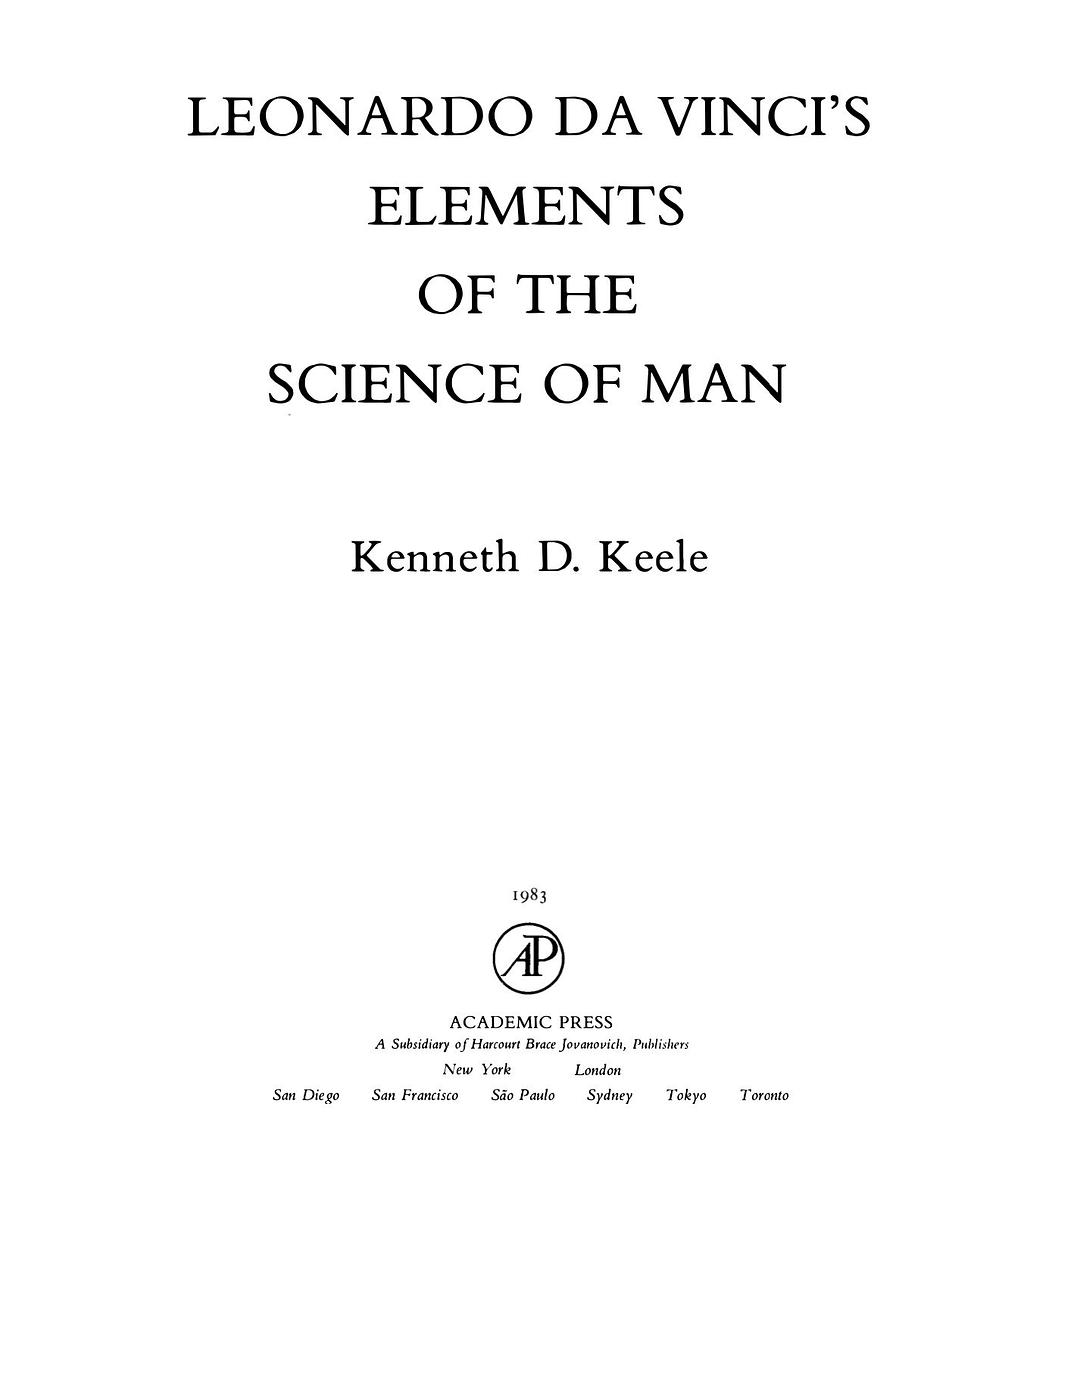 Leonardo da Vinci's elements of the science of man